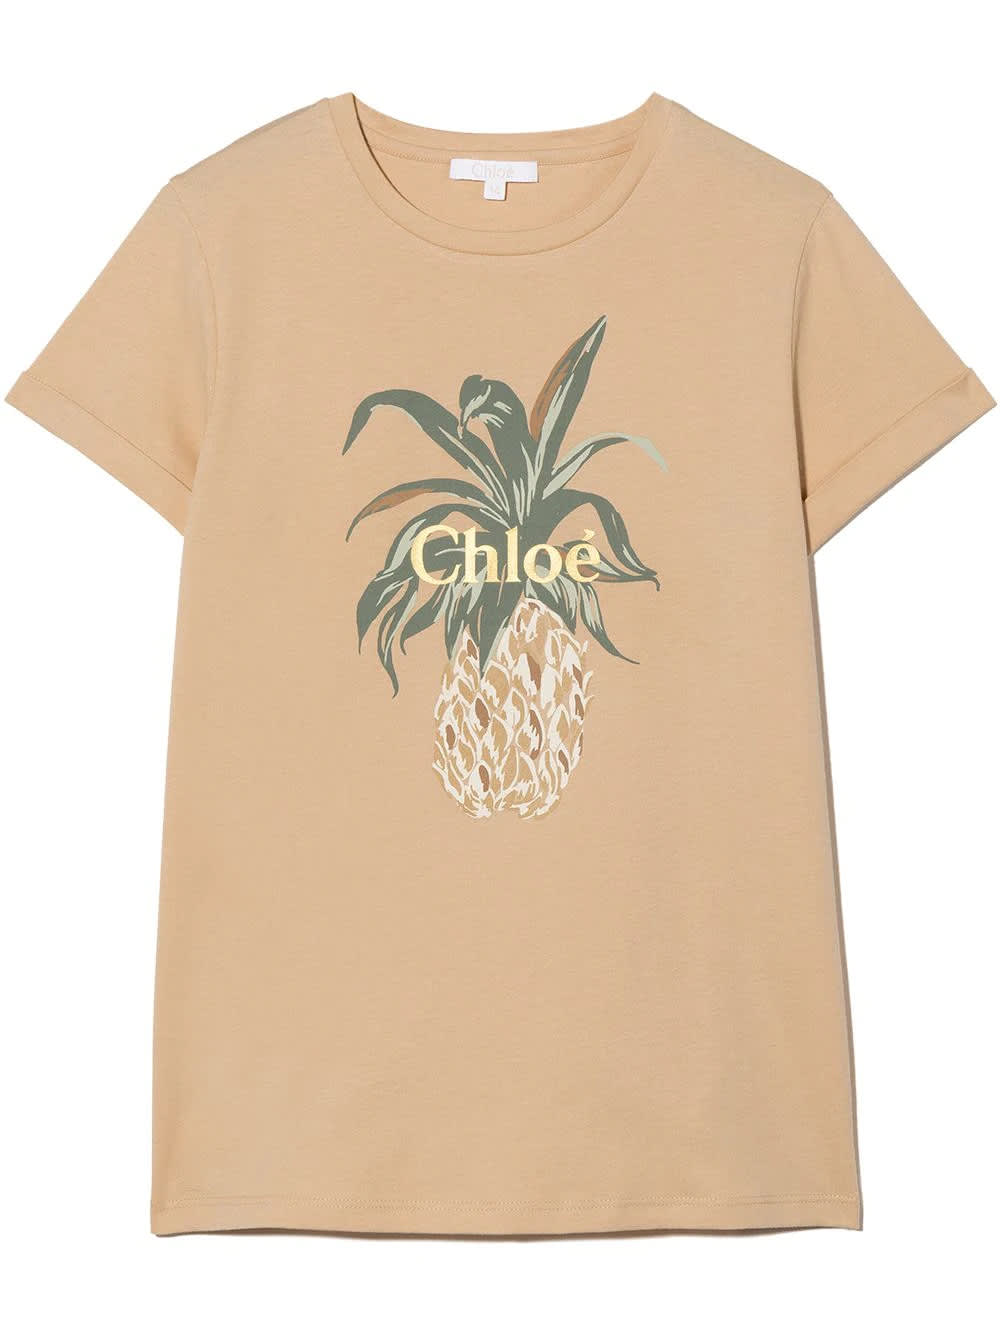 Chloé Kids Beige T-shirt With Pineapple Print And Chloe Logo